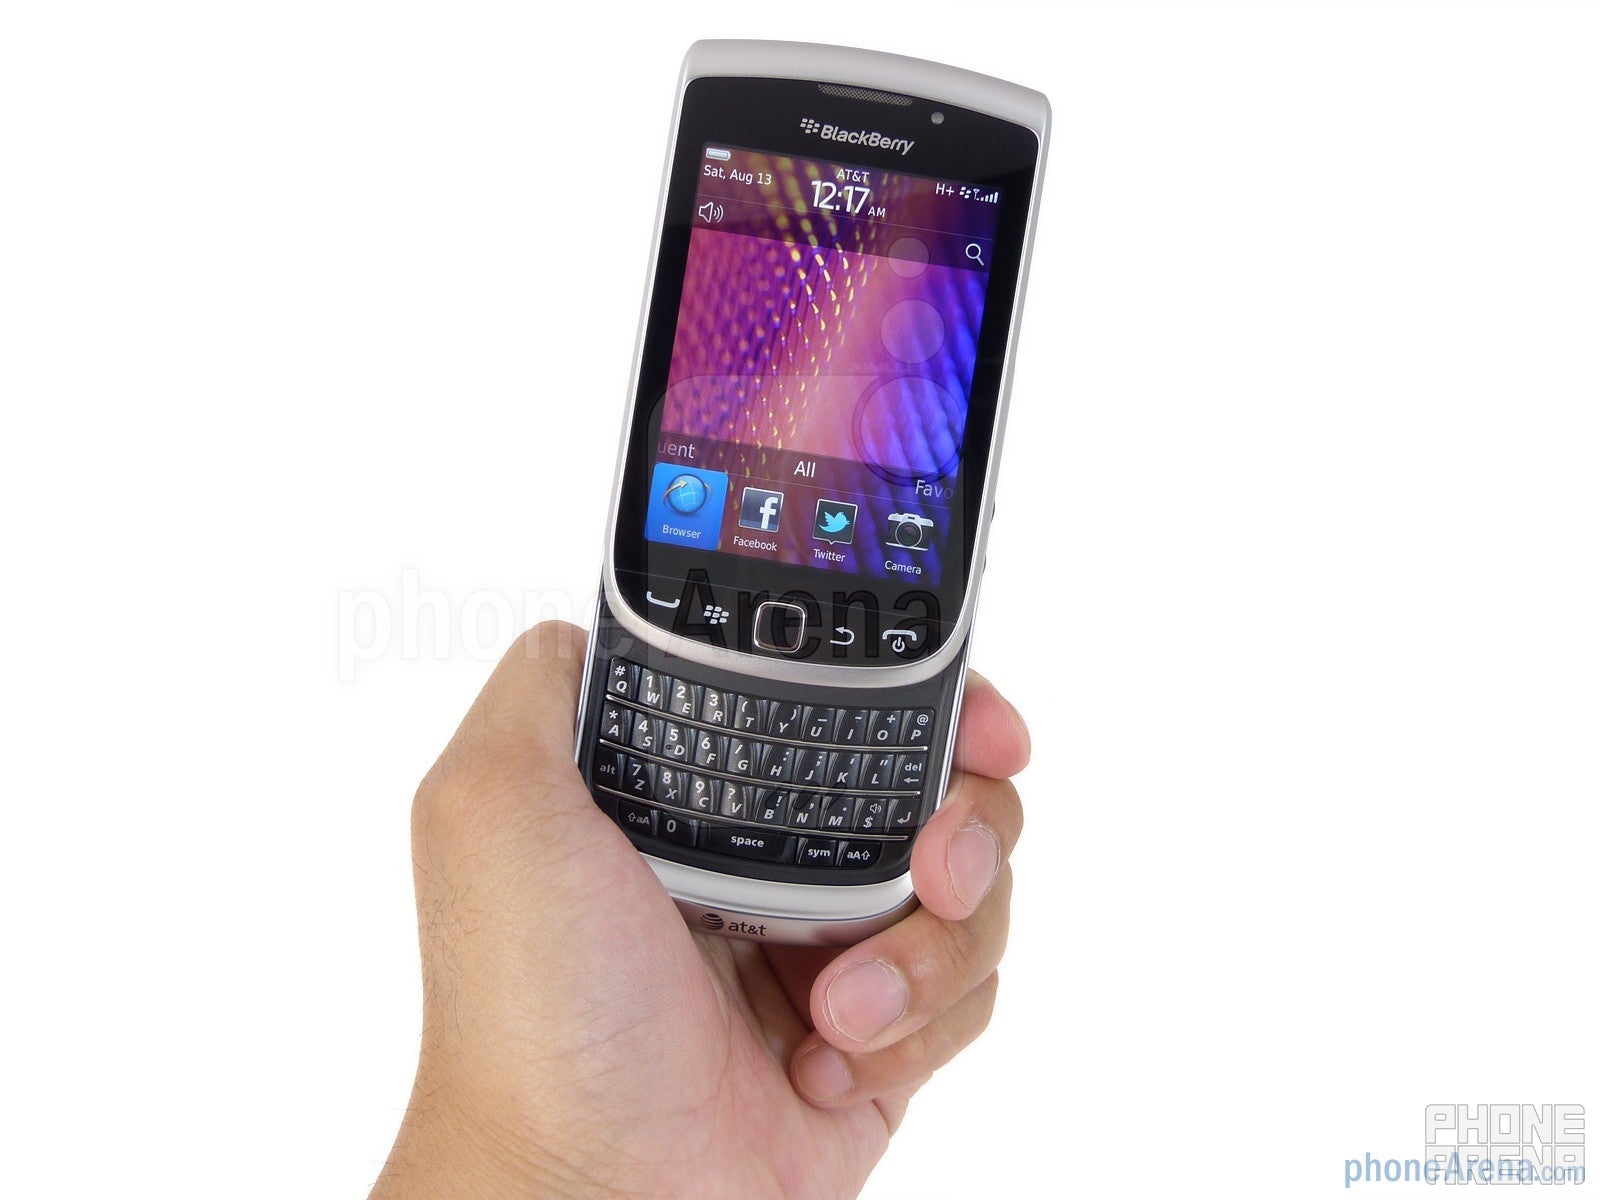 RIM BlackBerry Torch 9810 Review